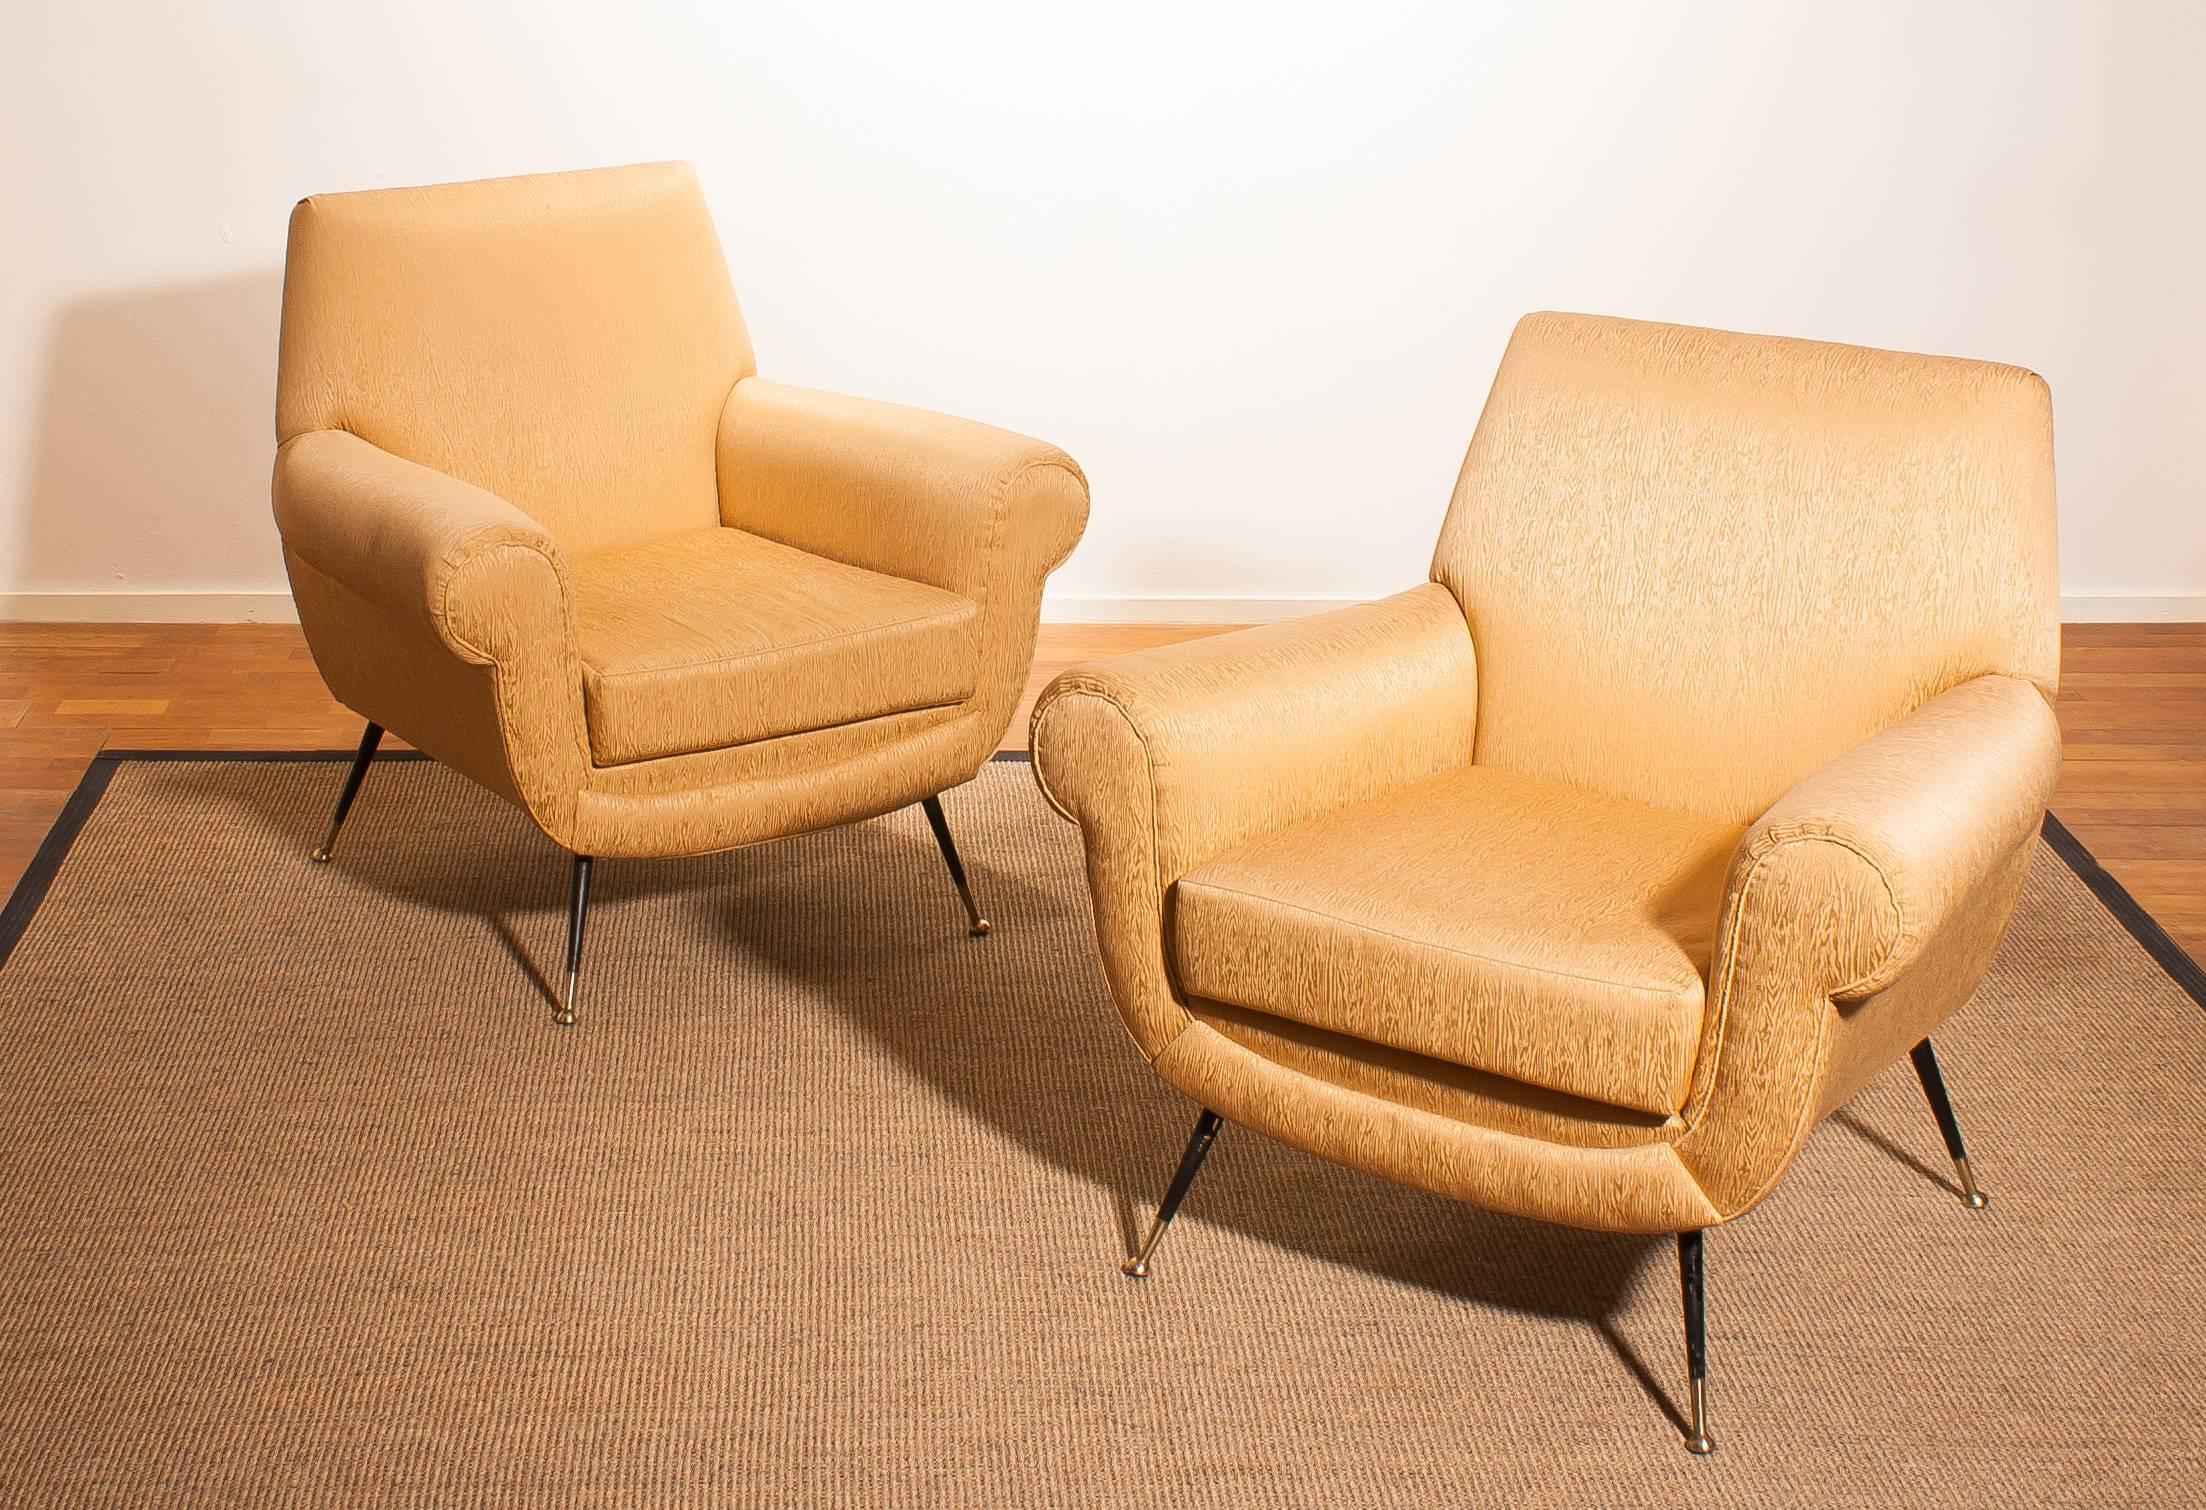 Mid-20th Century Golden Jacquard Upholstered Easy Chairs by Gigi Radice for Minotti, Brass Legs.